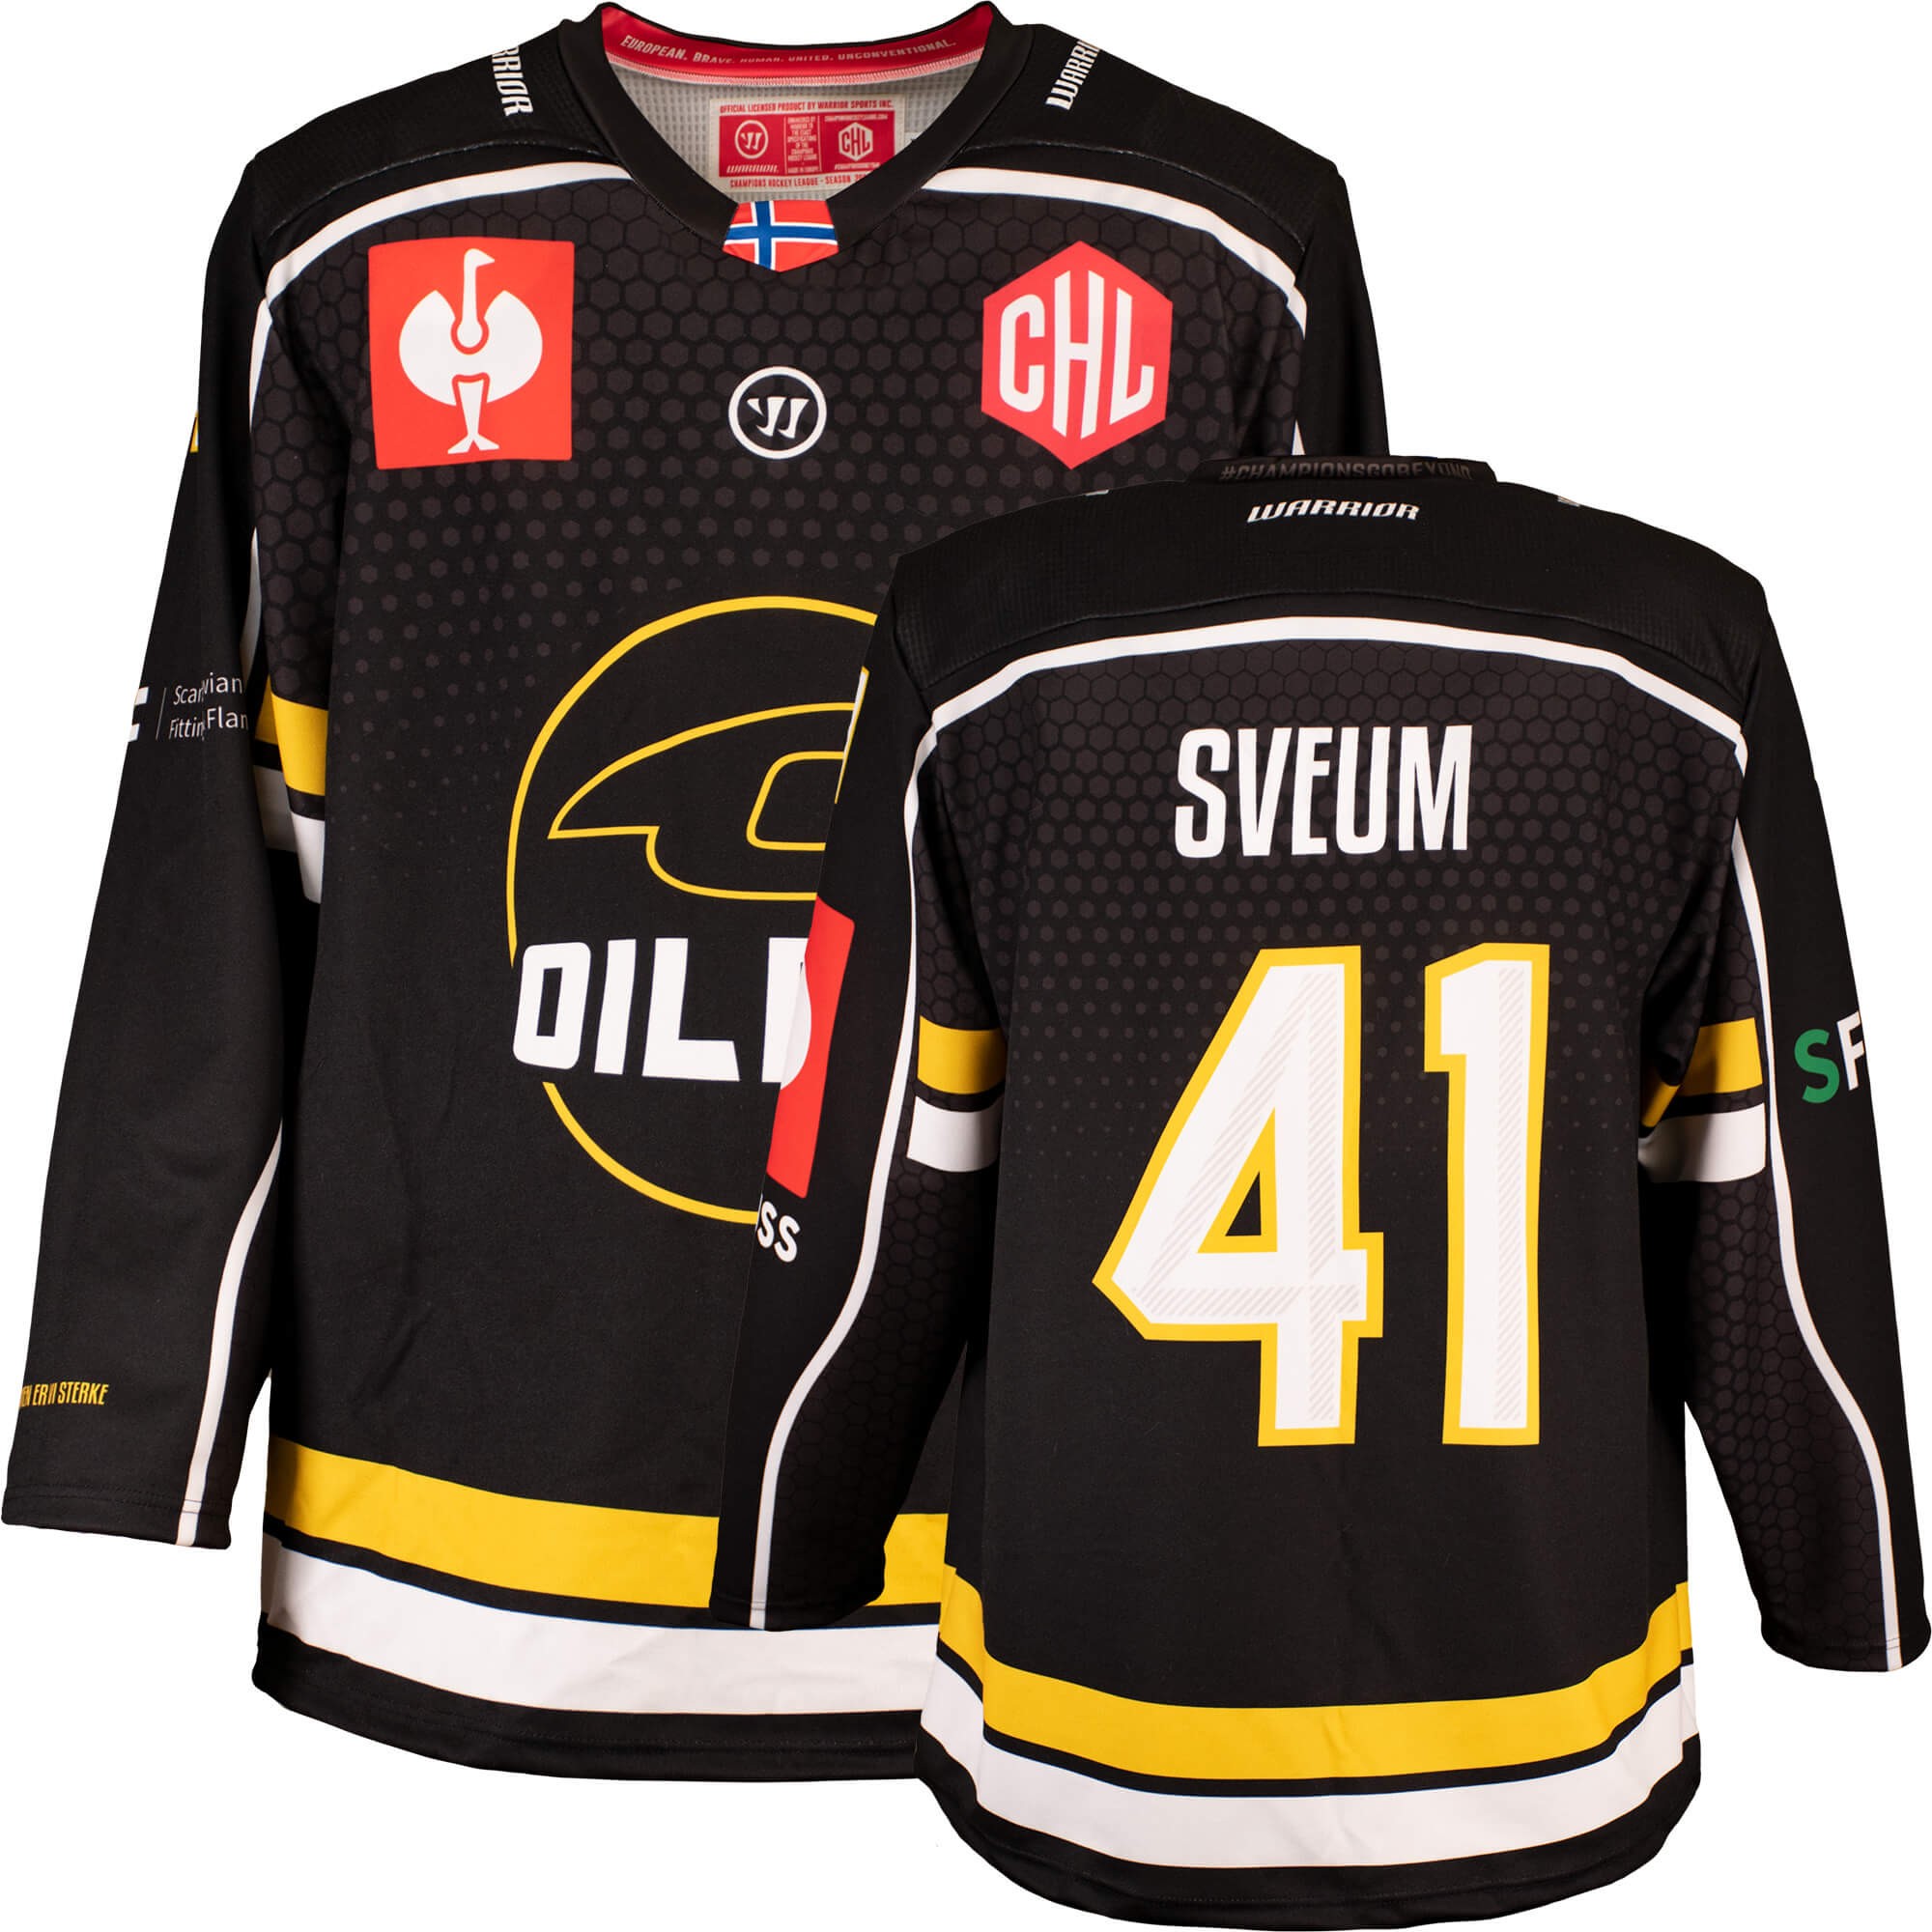 Sitcom sneeuwman rundvlees Stavanger Oilers - Champions Hockey League Shop powered by Warrior